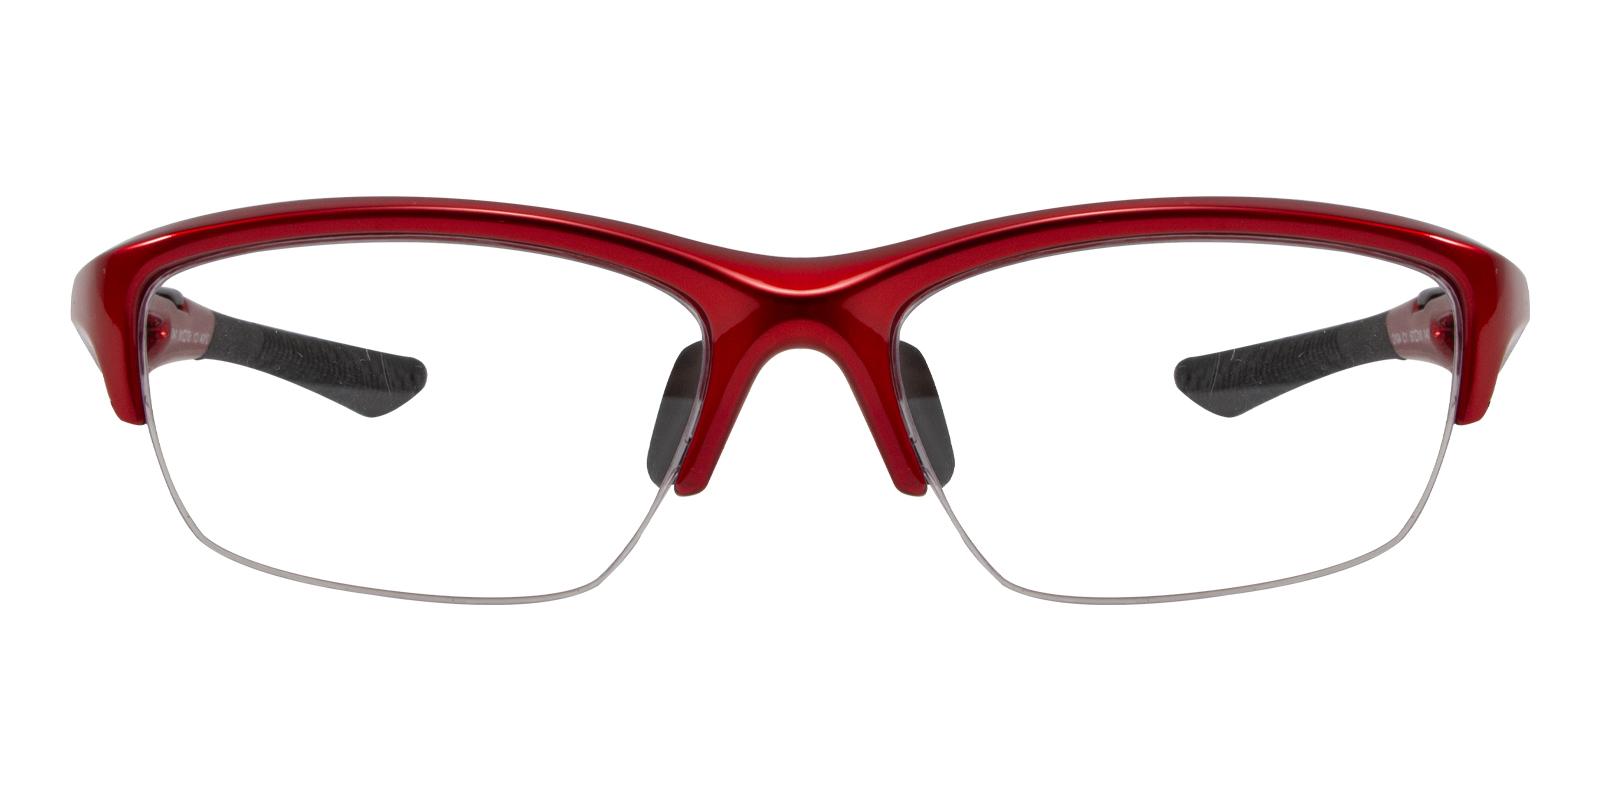 Voyager Red TR NosePads , SportsGlasses Frames from ABBE Glasses